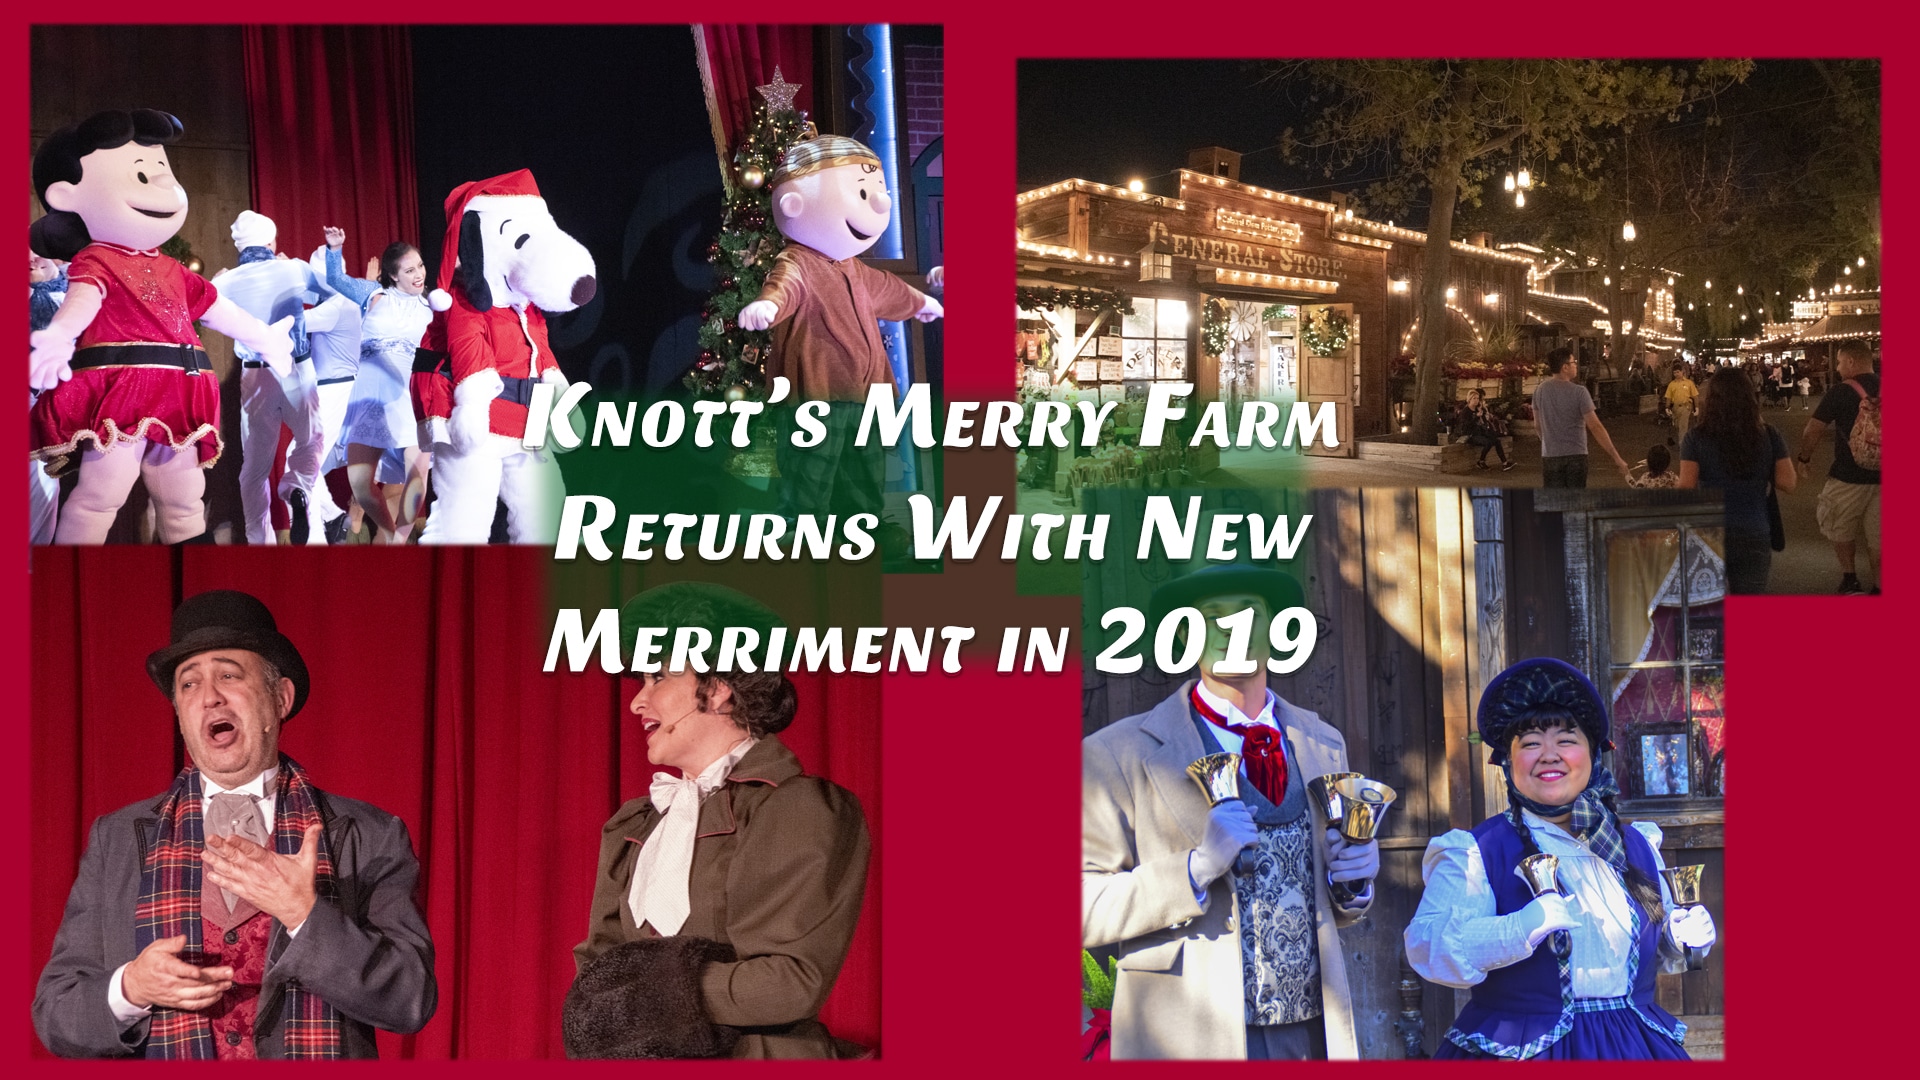 Knott’s Merry Farm Returns With New Merriment in 2019